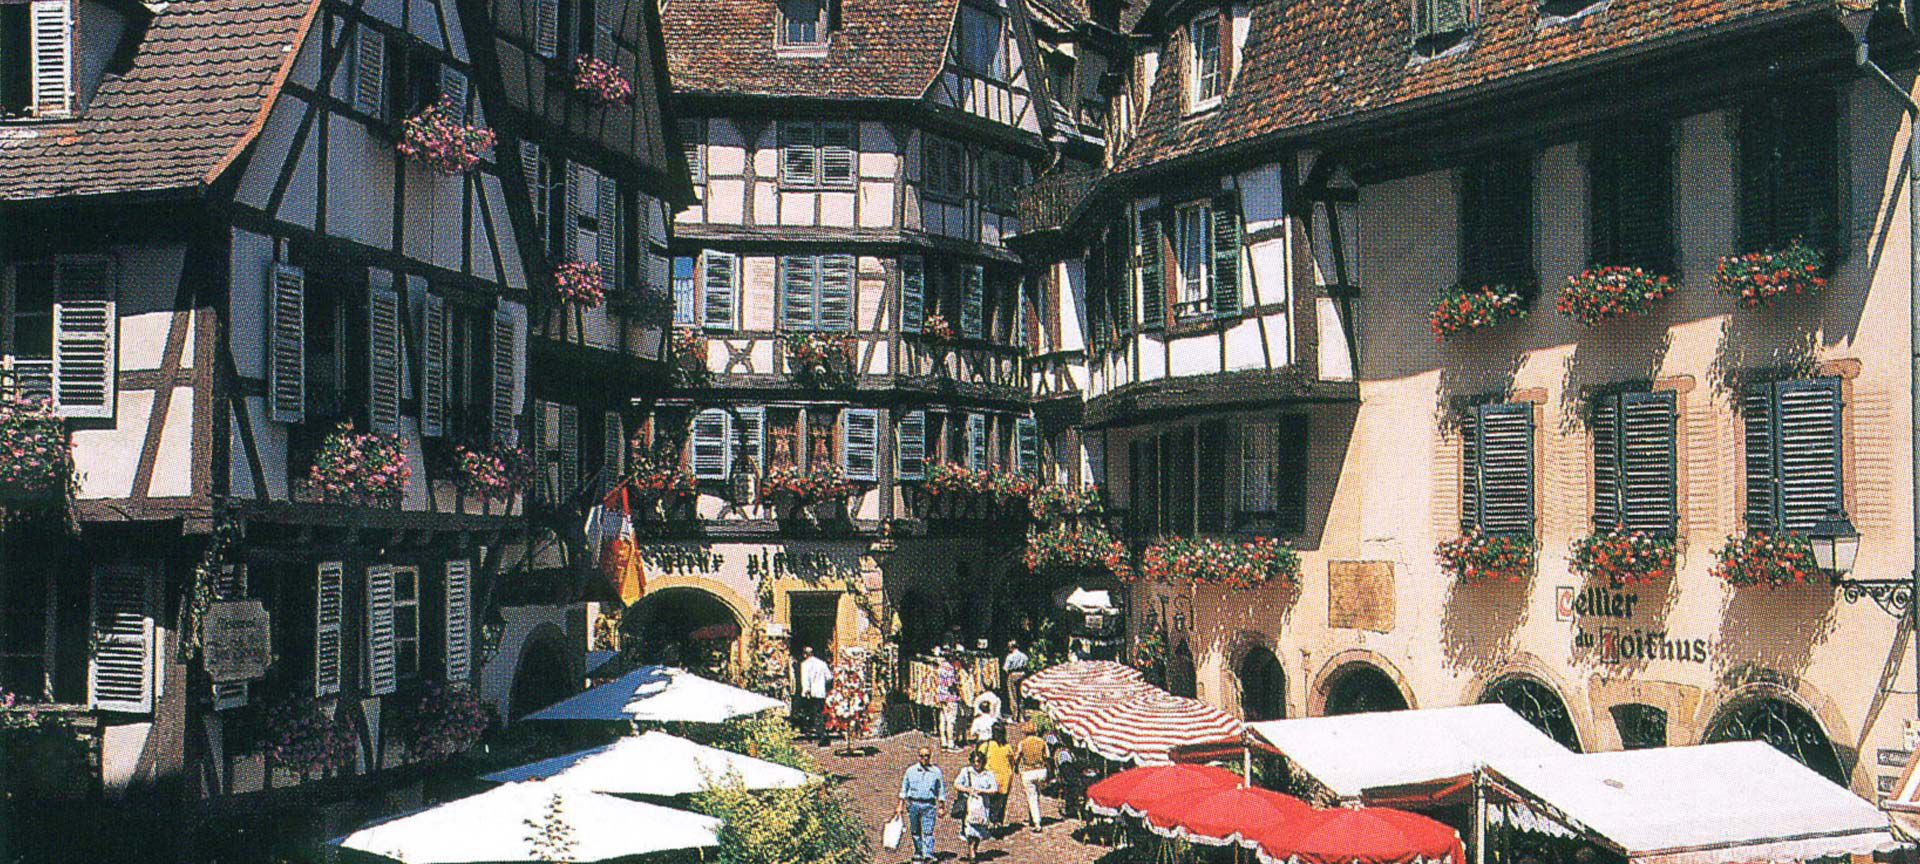 Center square Strasbourg France